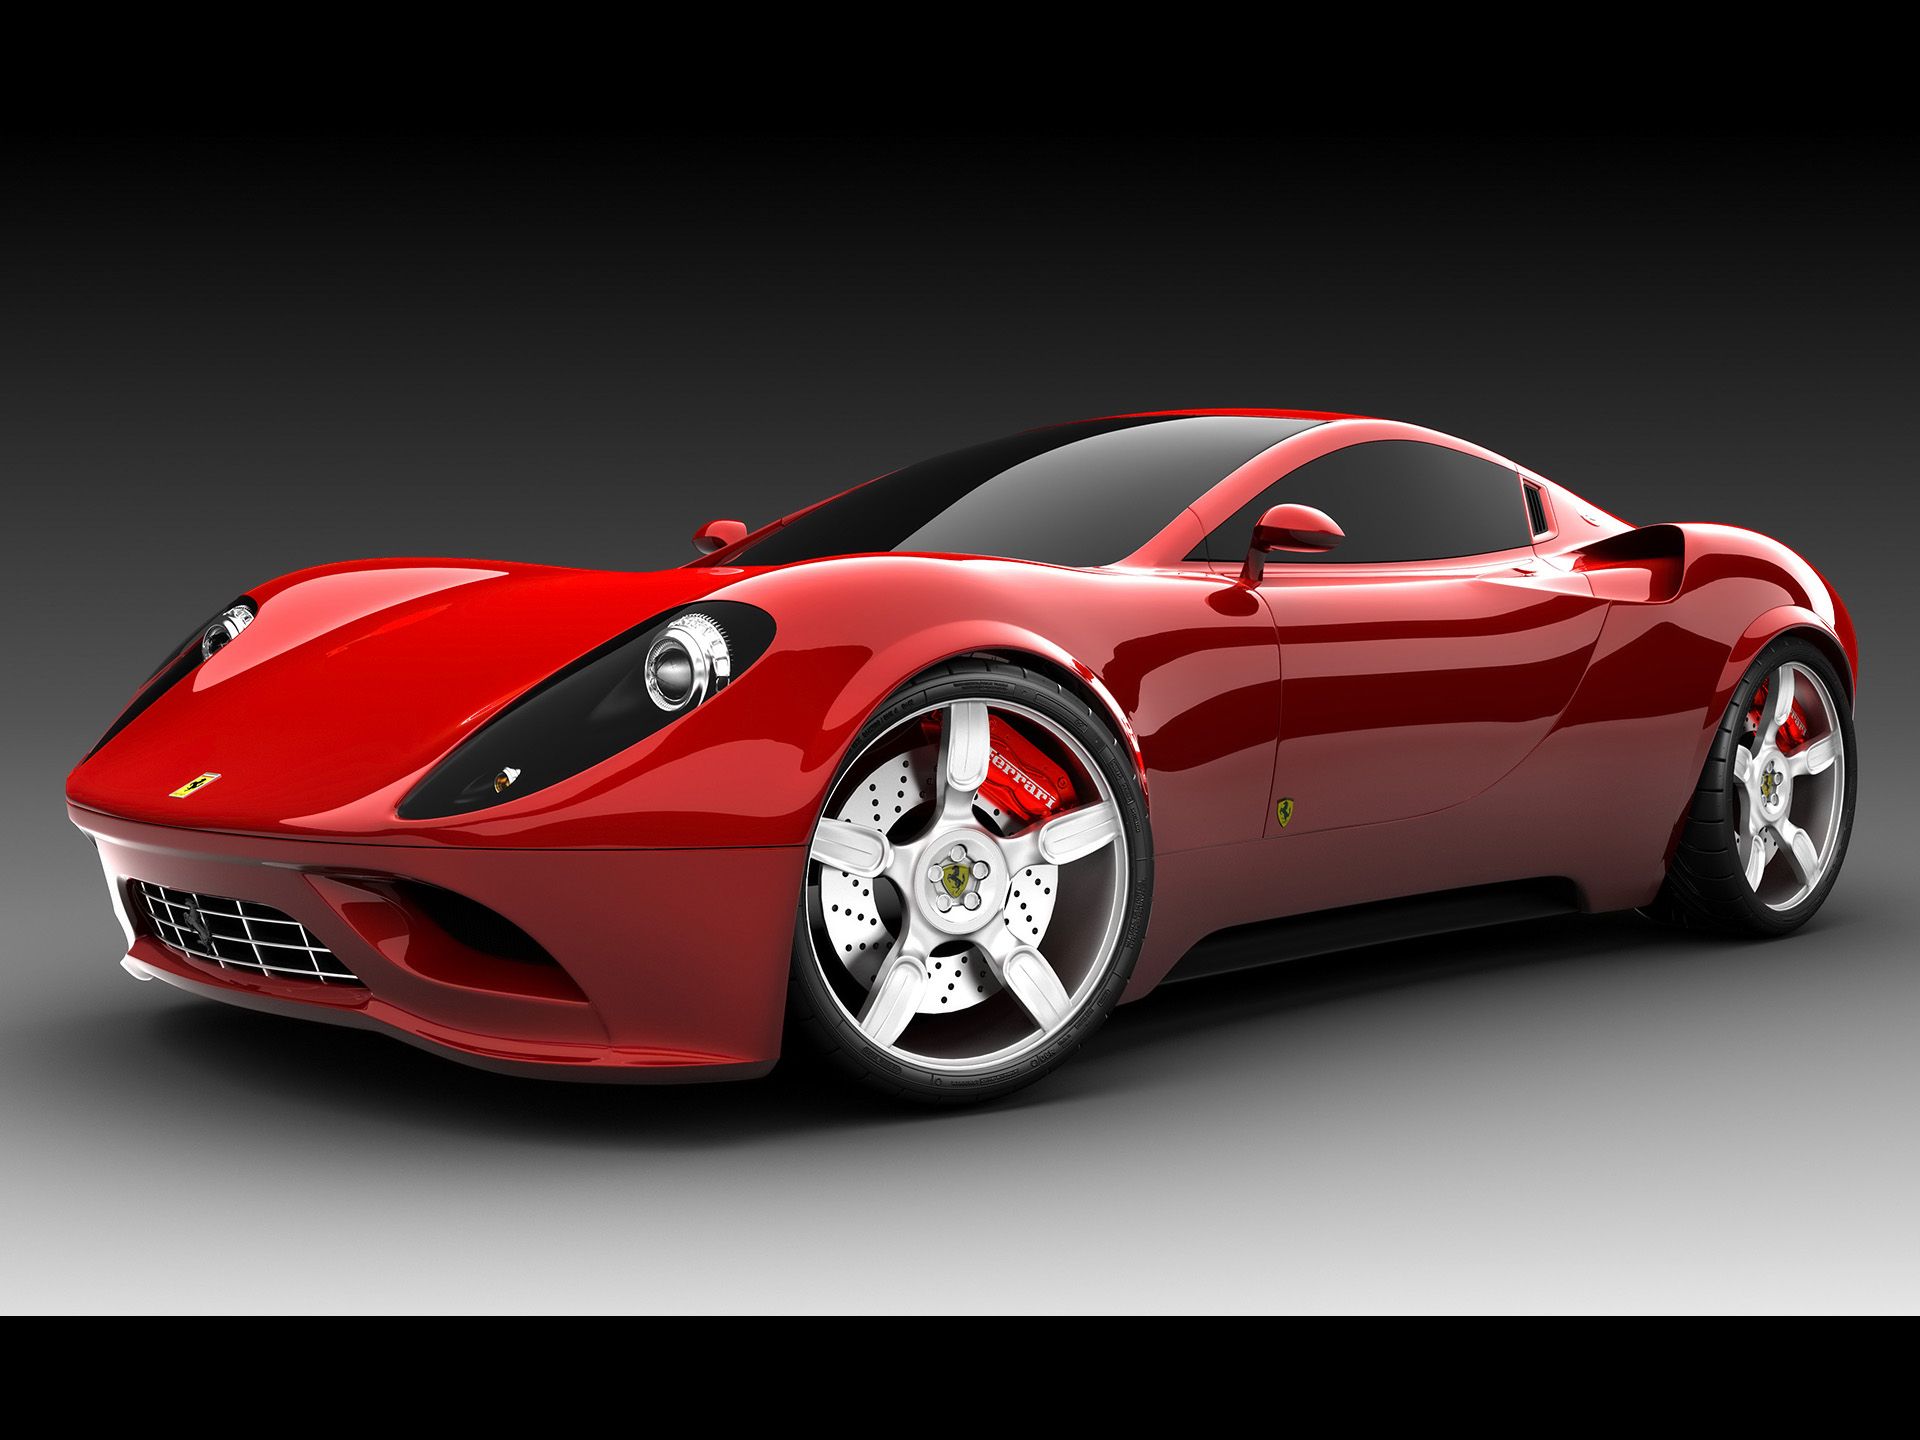 Ferrari Dino Windows 7 Cars Desktop Wallpaper. Car Wallpaper